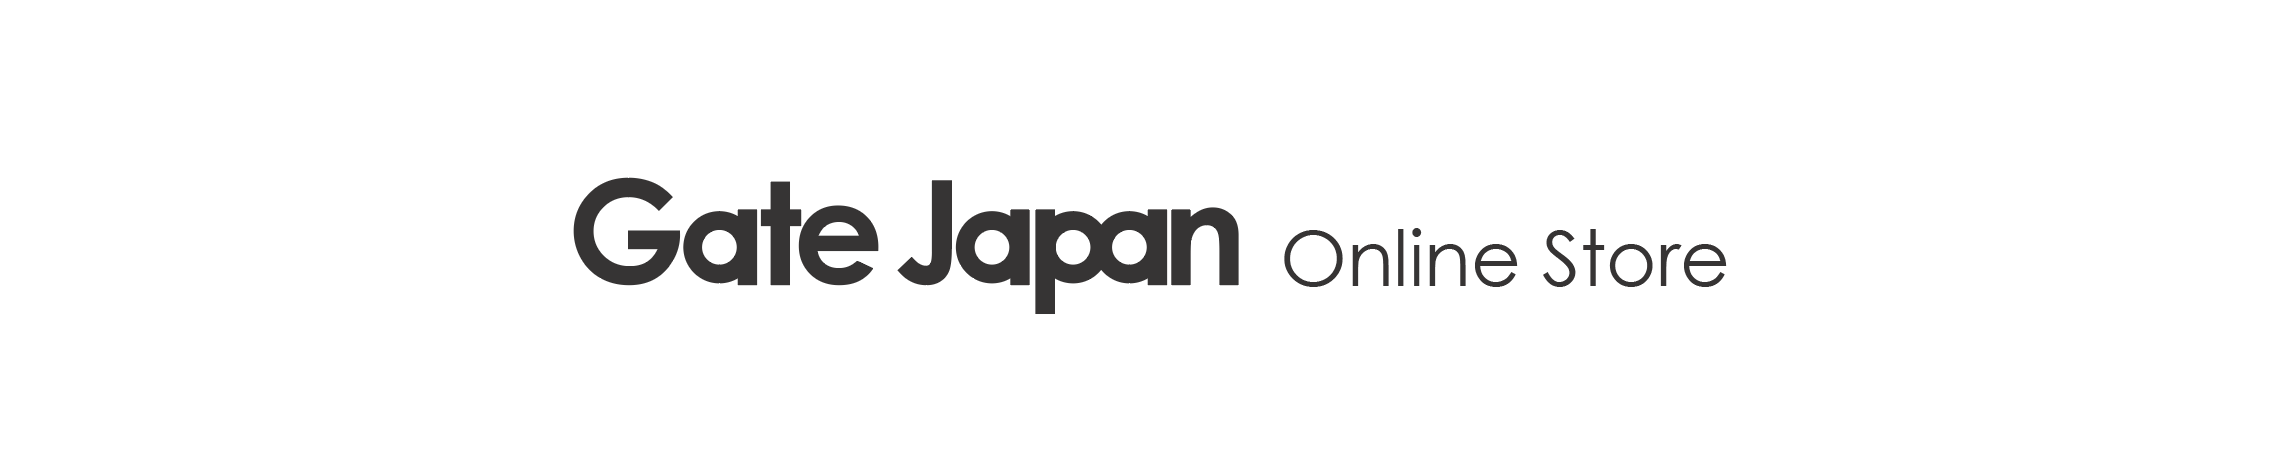 Gate Japan online store